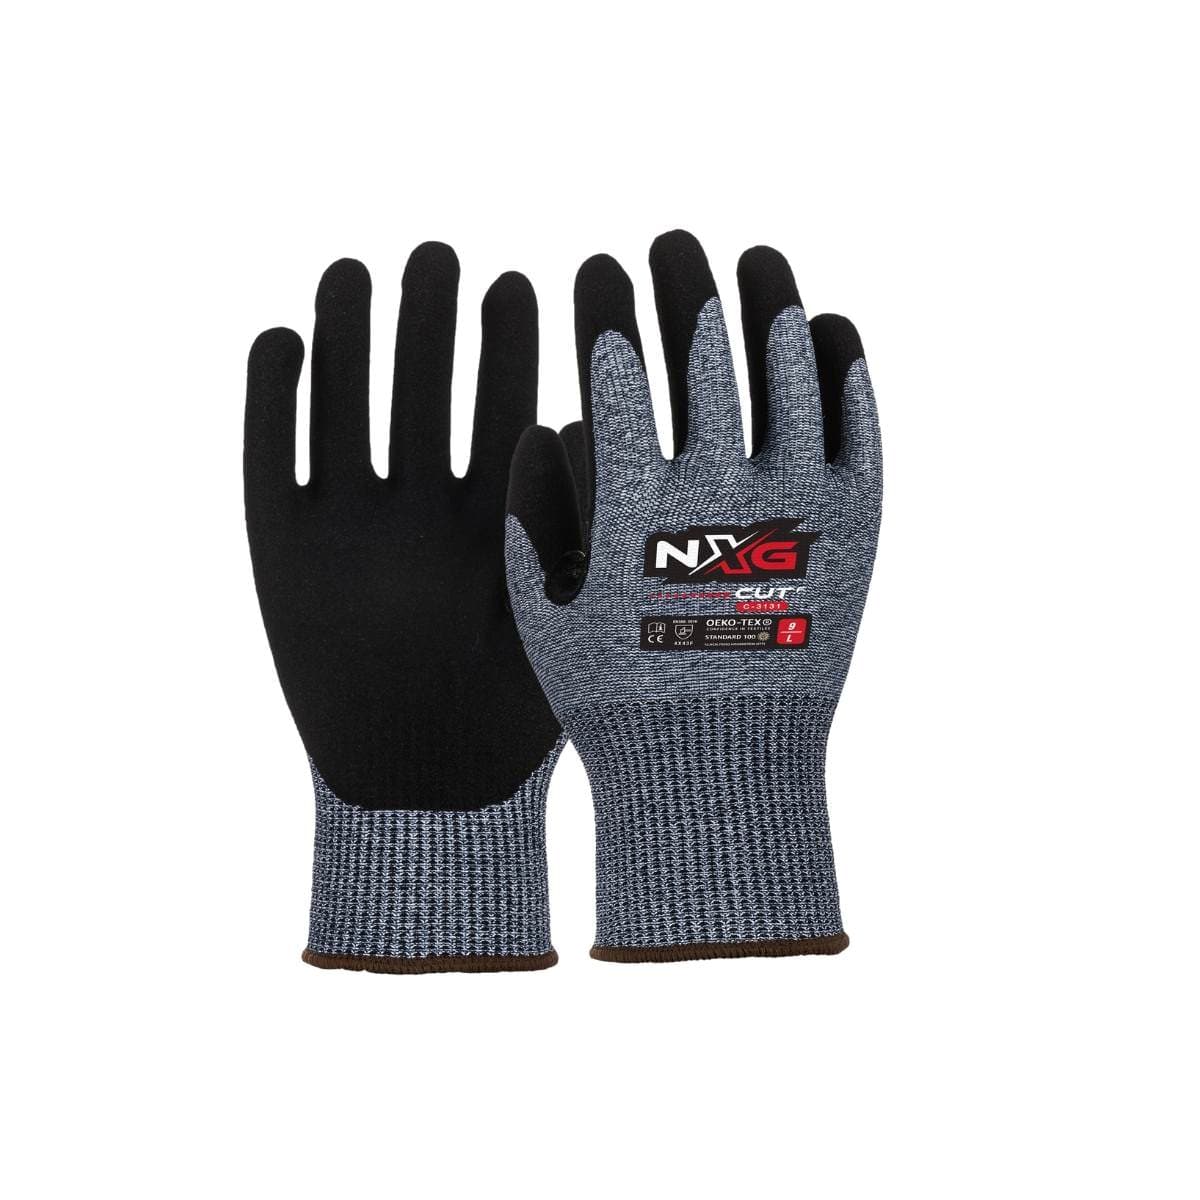 Cut Resistant Work Gloves (12 gloves per pack)